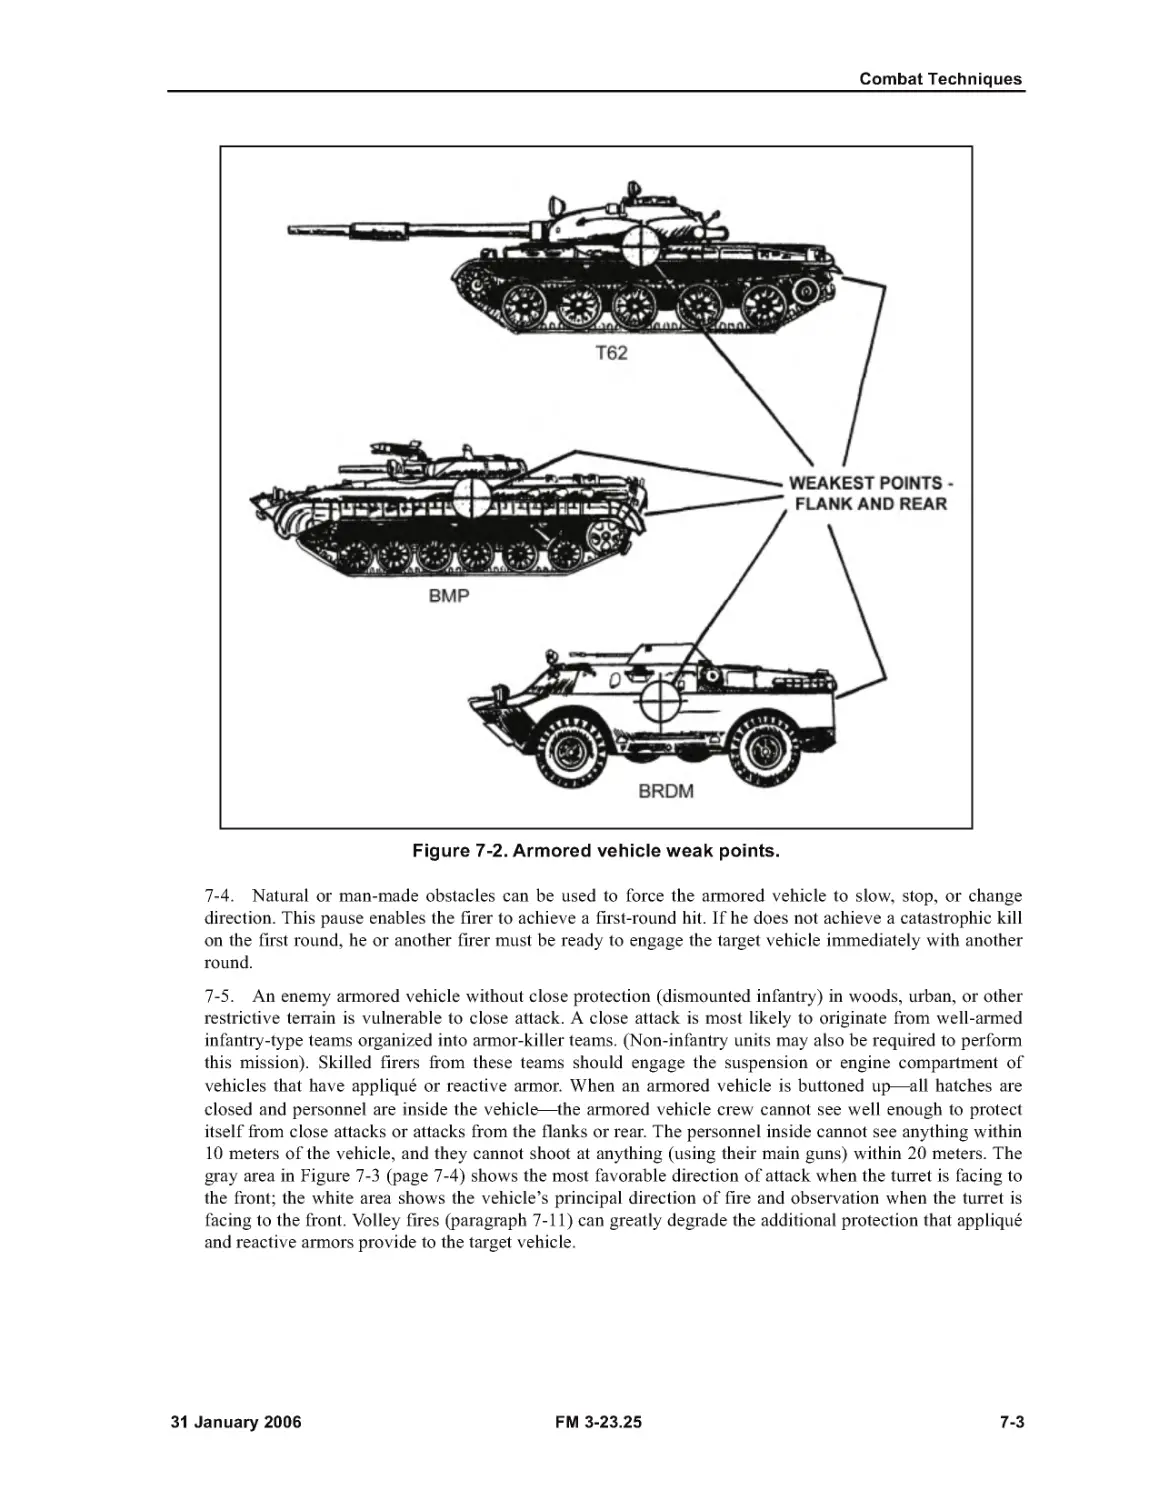 Figure 7-2. Armored vehicle weak points.